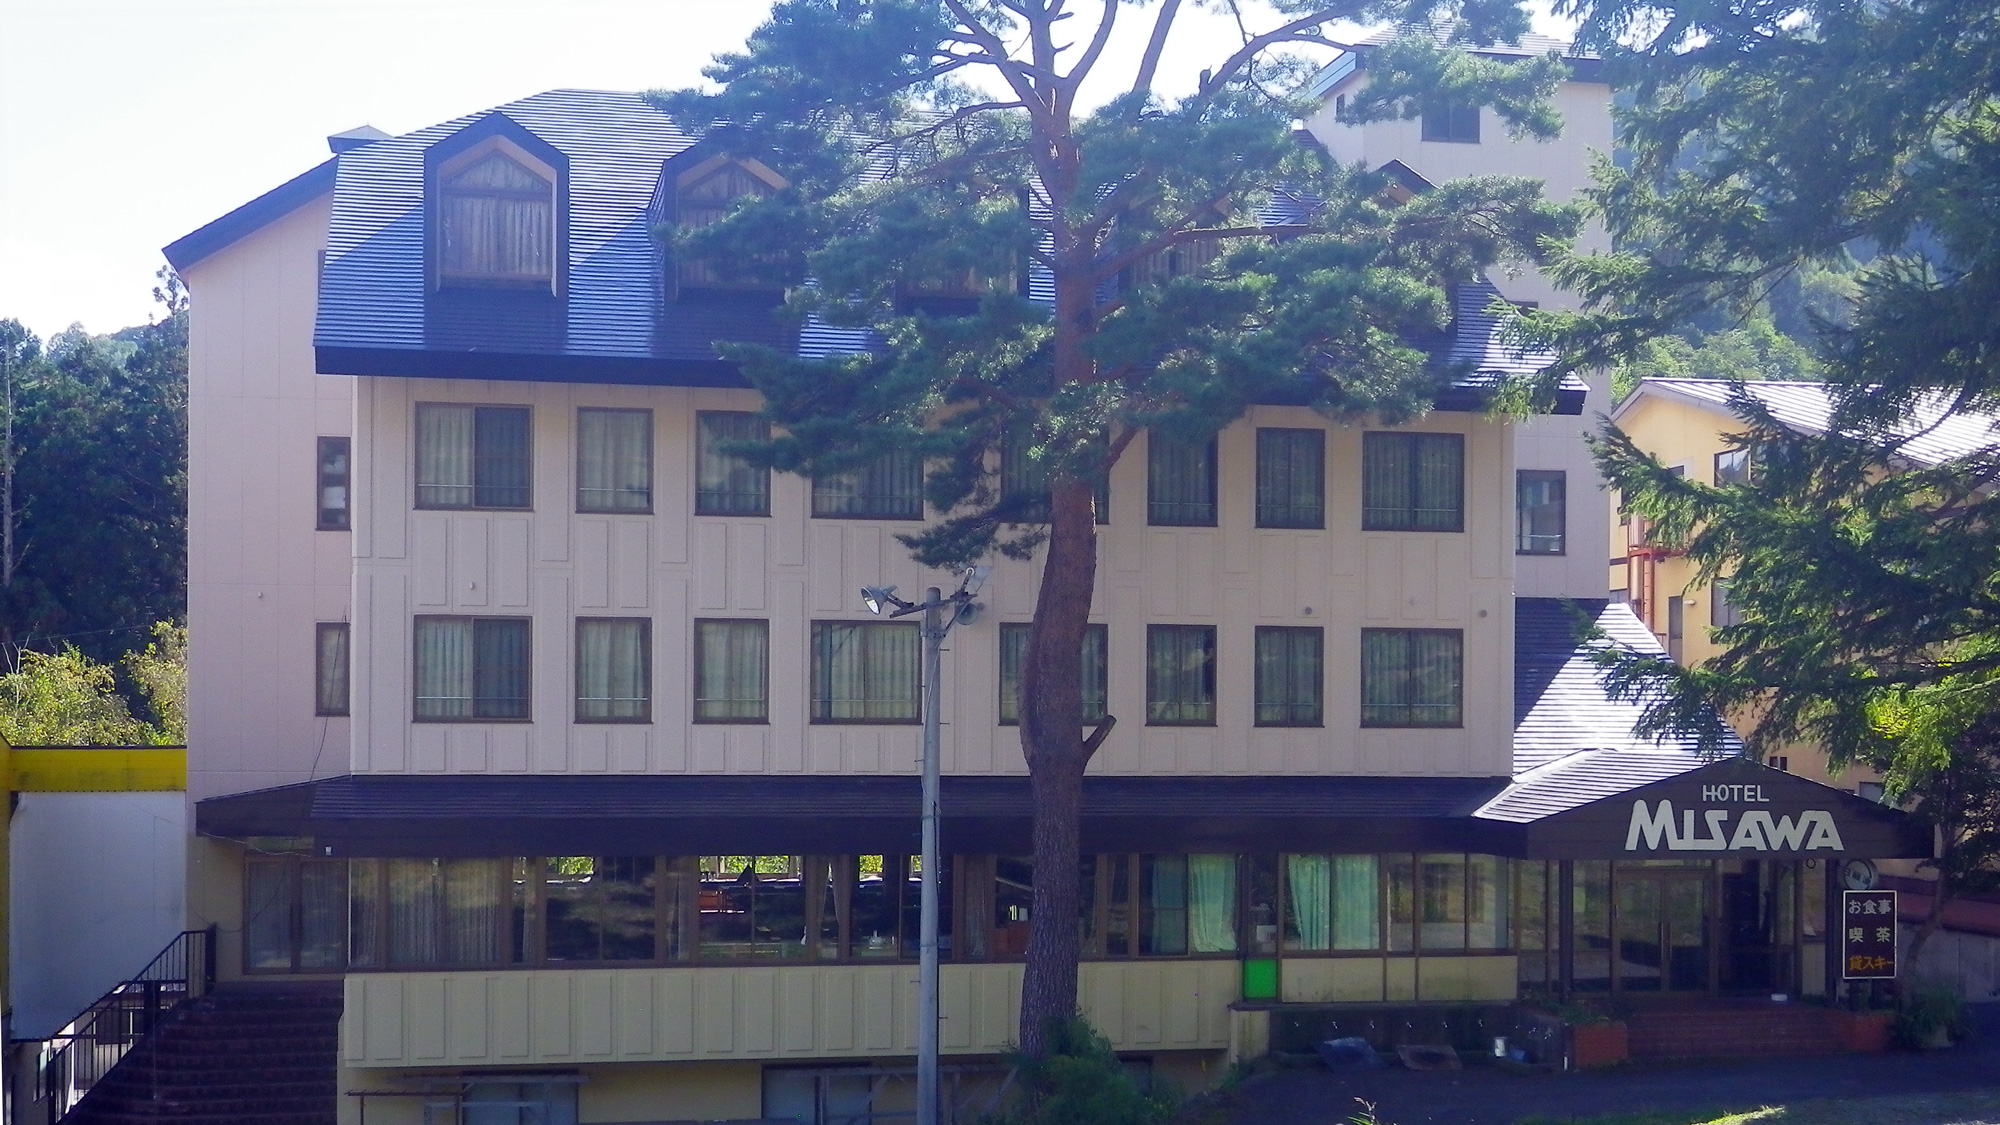 Hotel Misawa